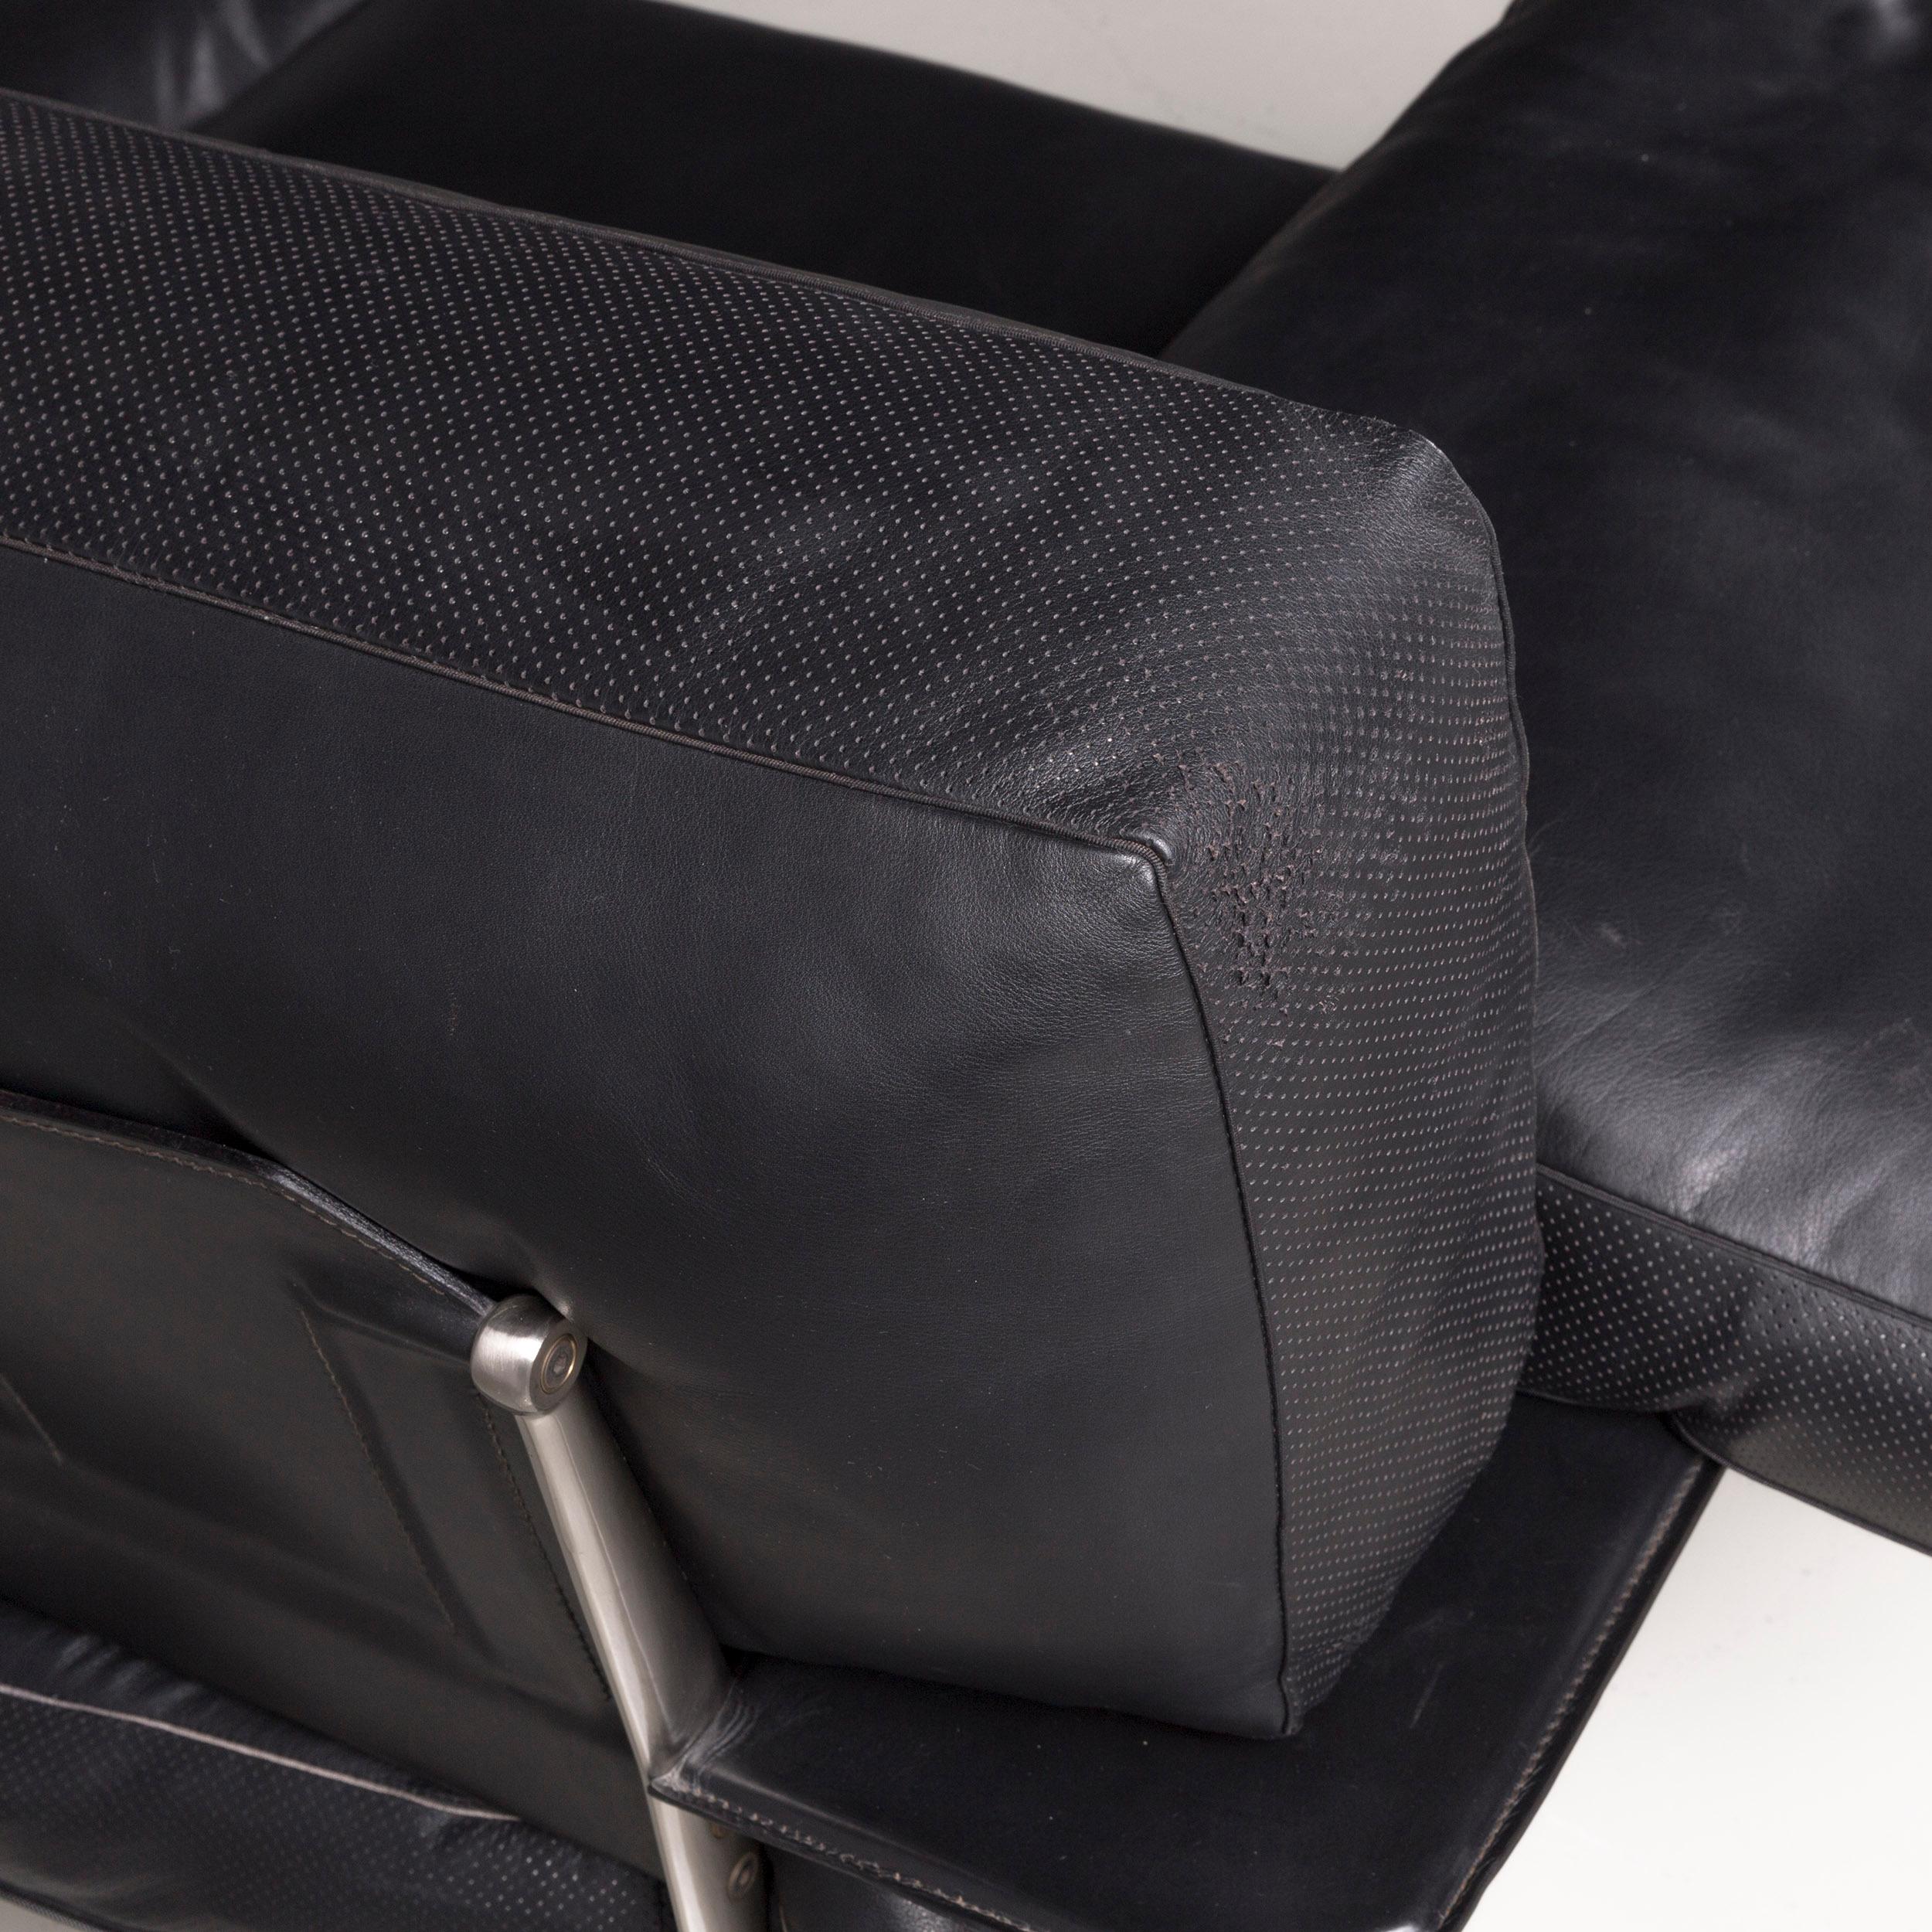 B&B Italia Diesis Designer Sofa Leather Black Three-Seat Couch Modern For Sale 2